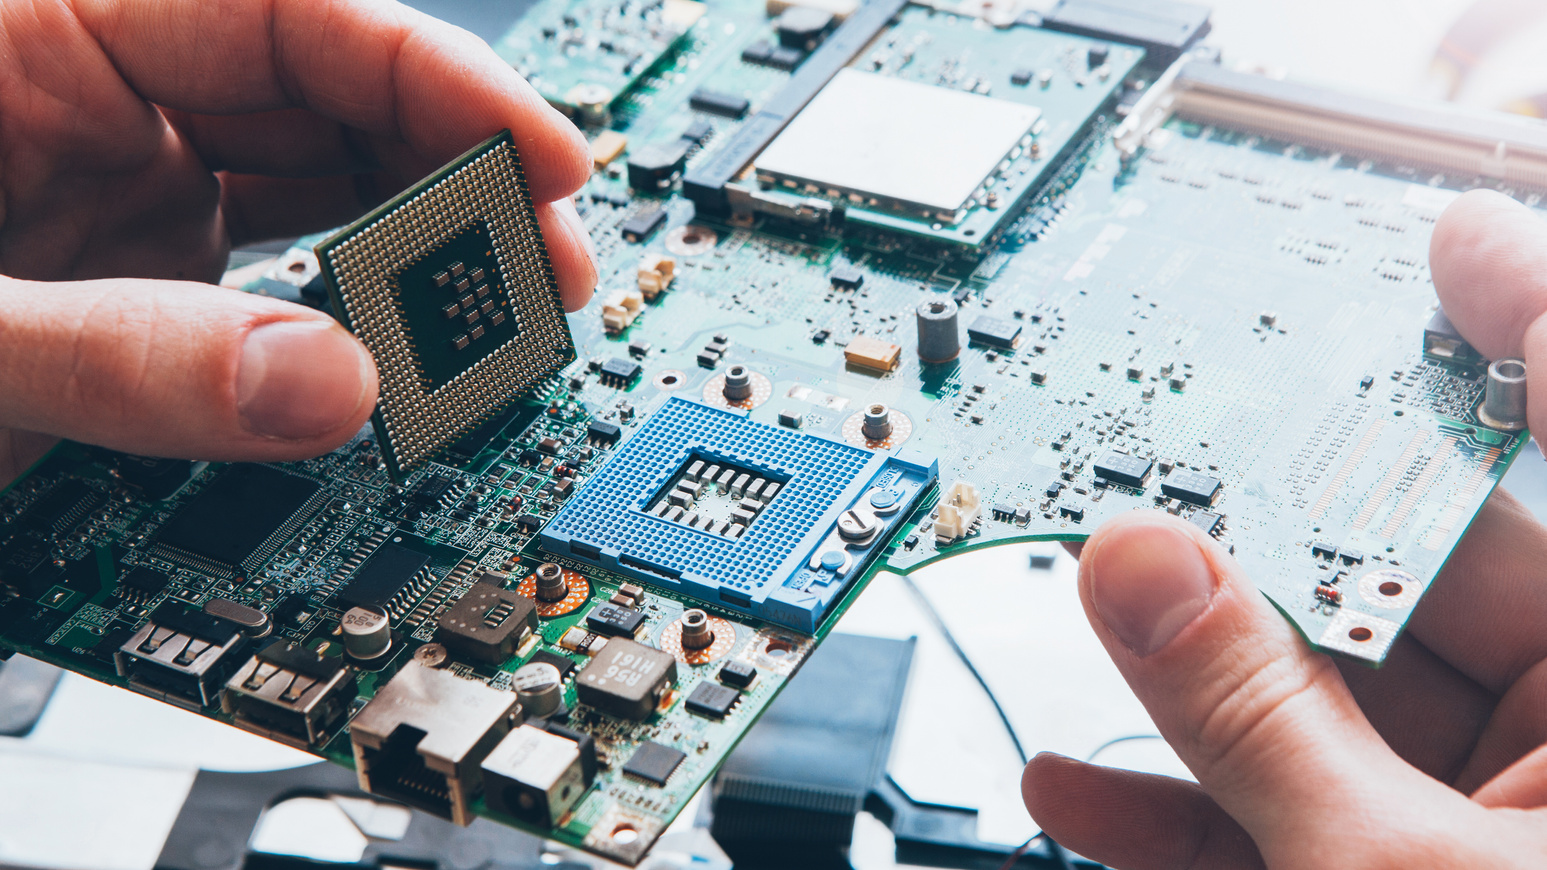 tech support hardware repair cpu motherboard